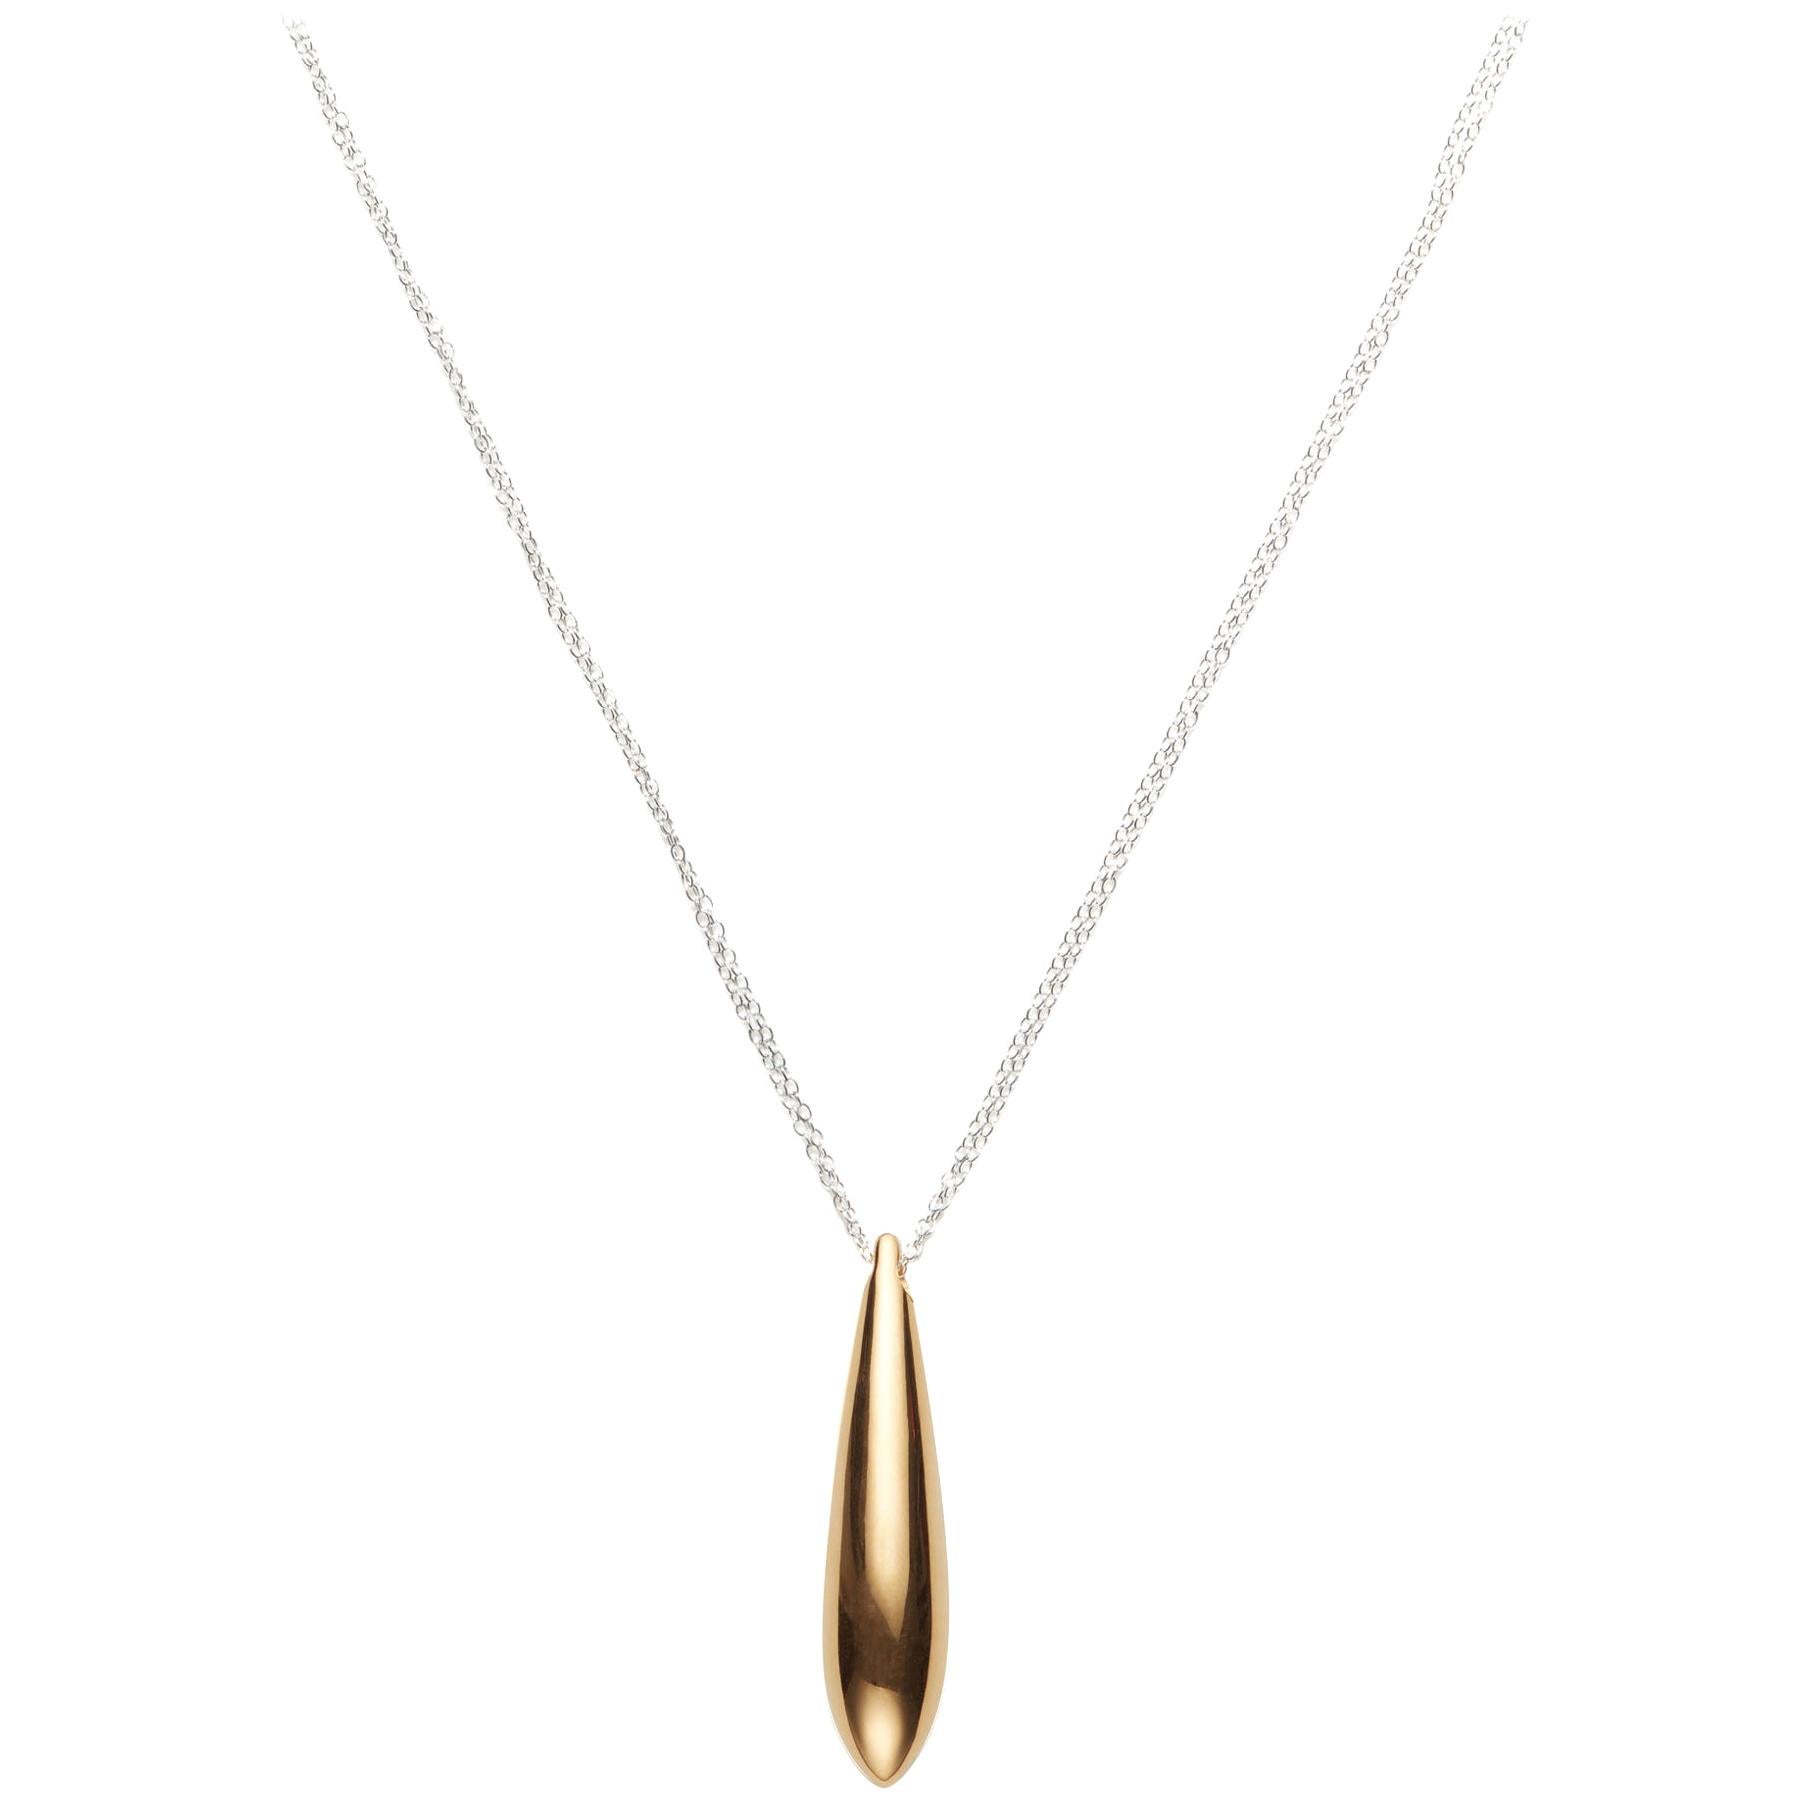 AGMES 18kt Gold Vermeil Drop Pendant Necklace Double Sterling Silver Chain